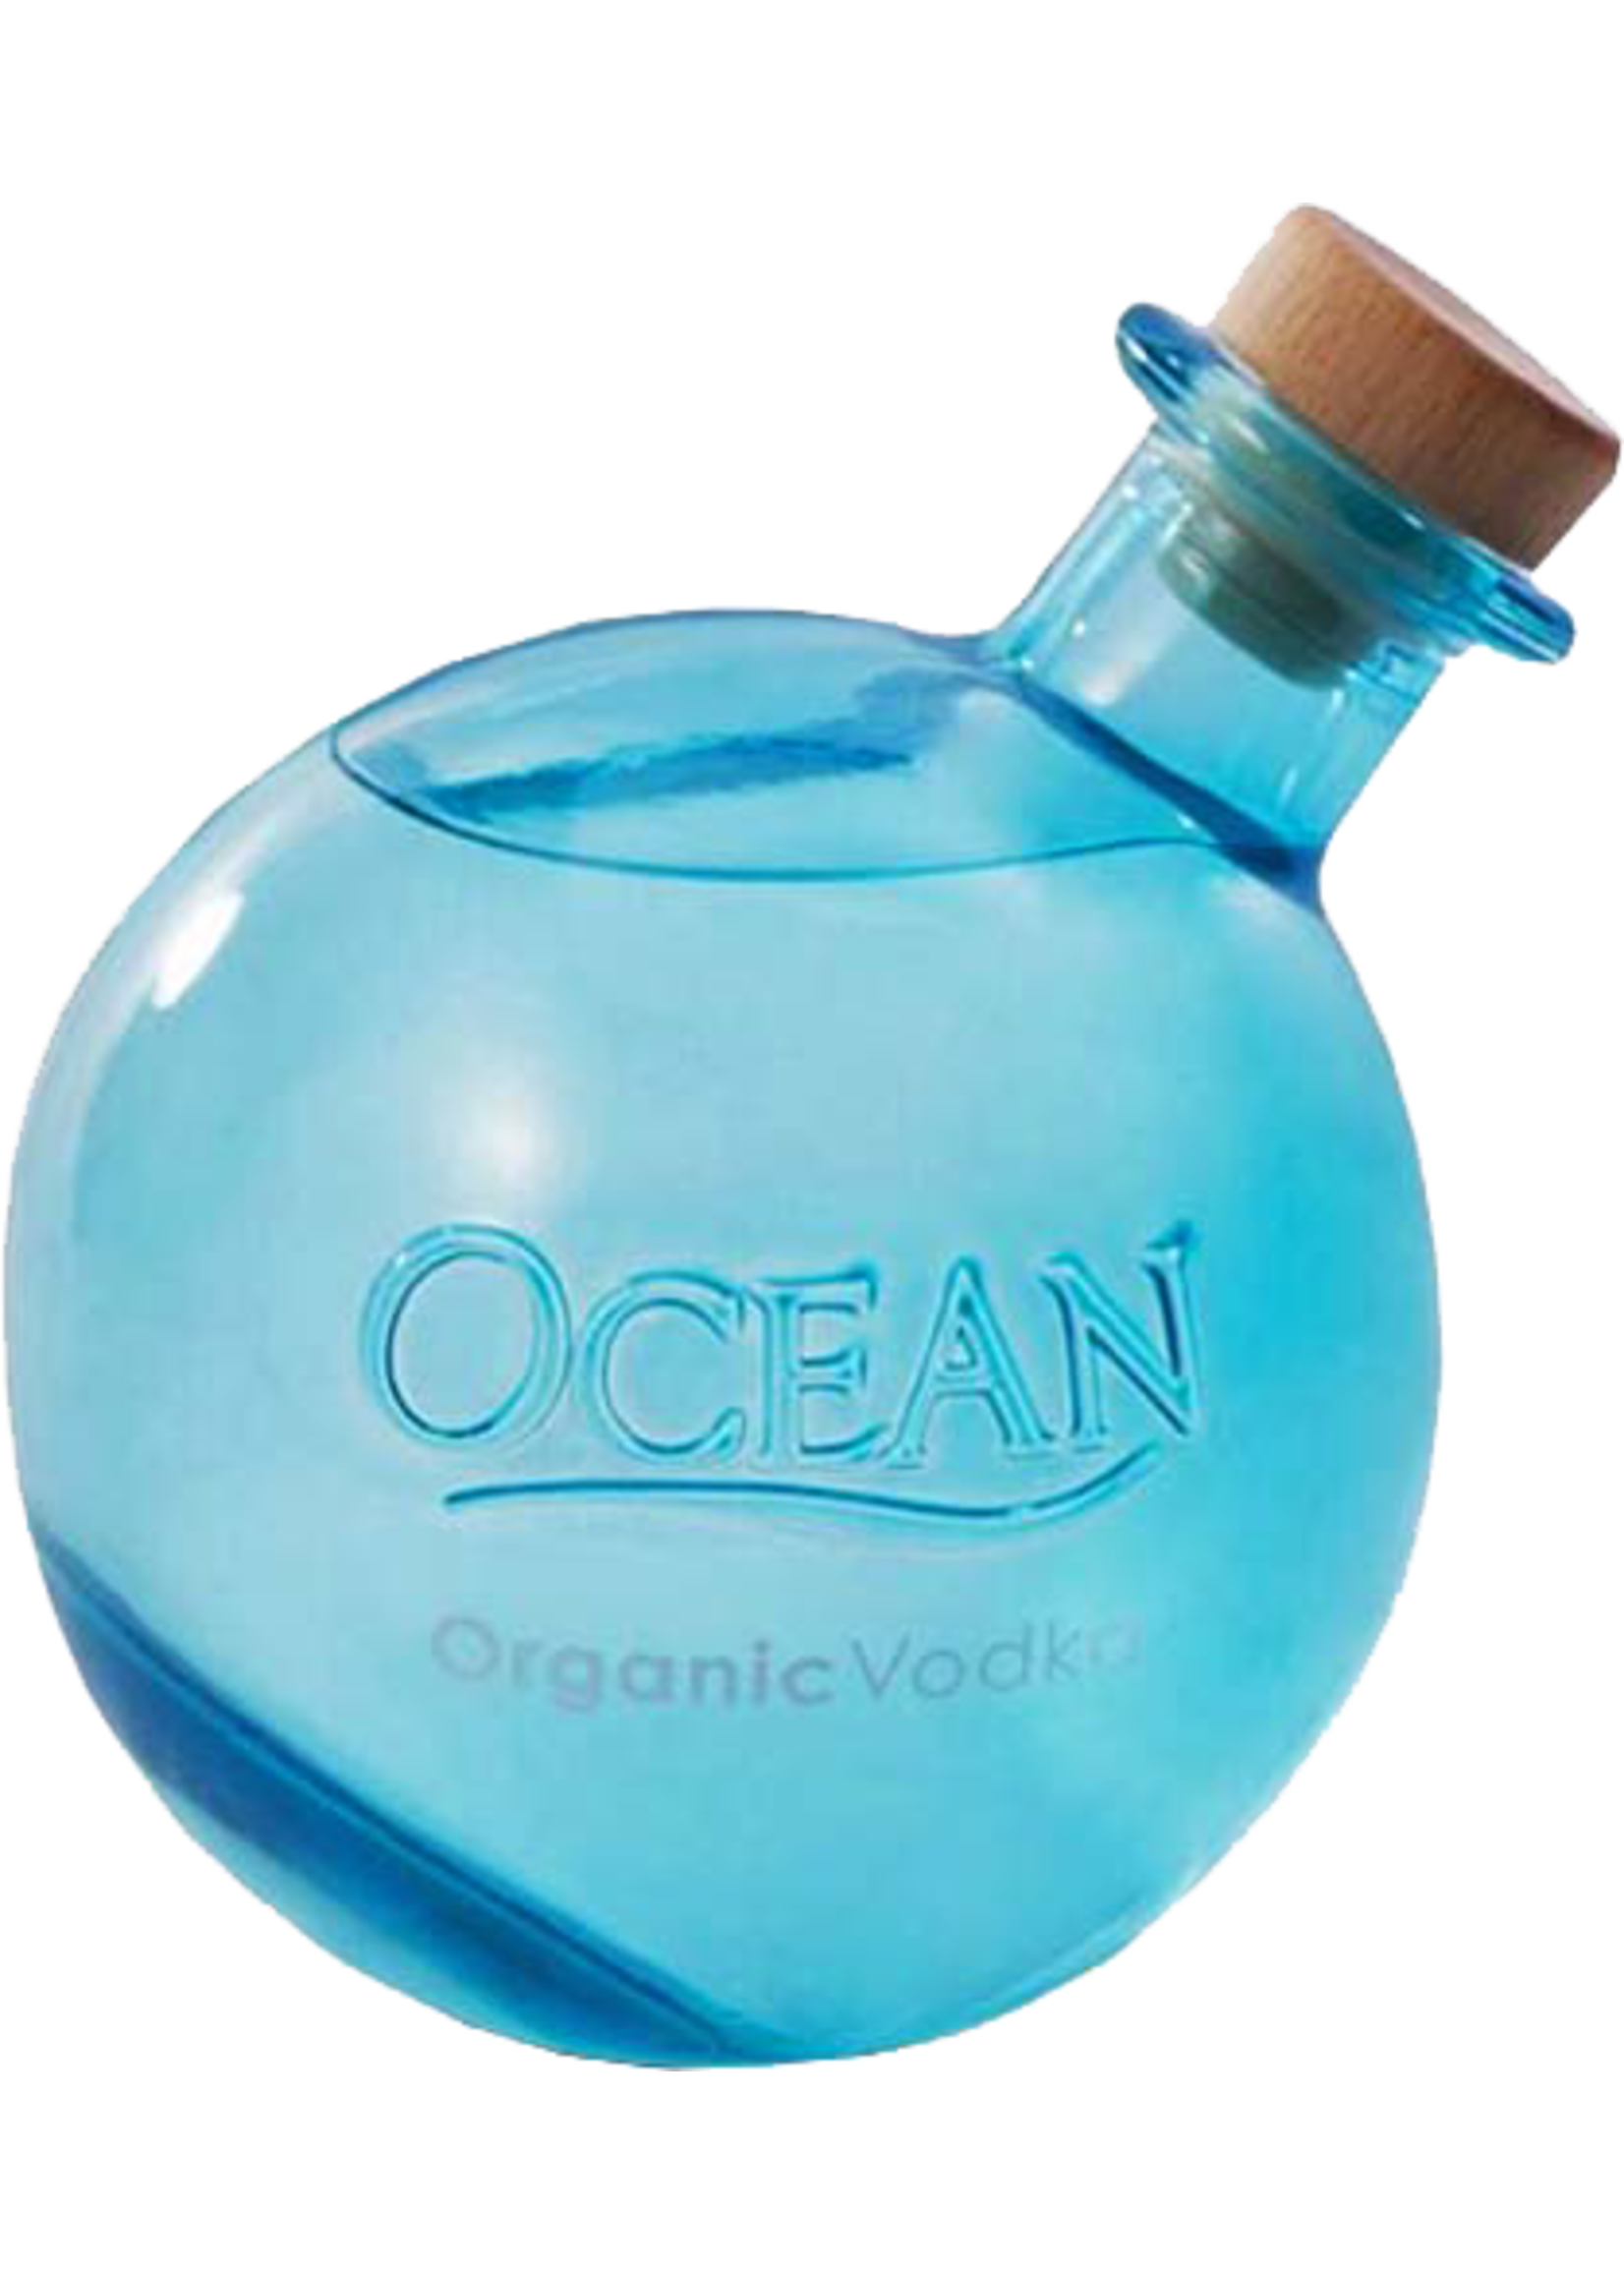 OCEAN OCEAN	ORGANIC VODKA	1.75L